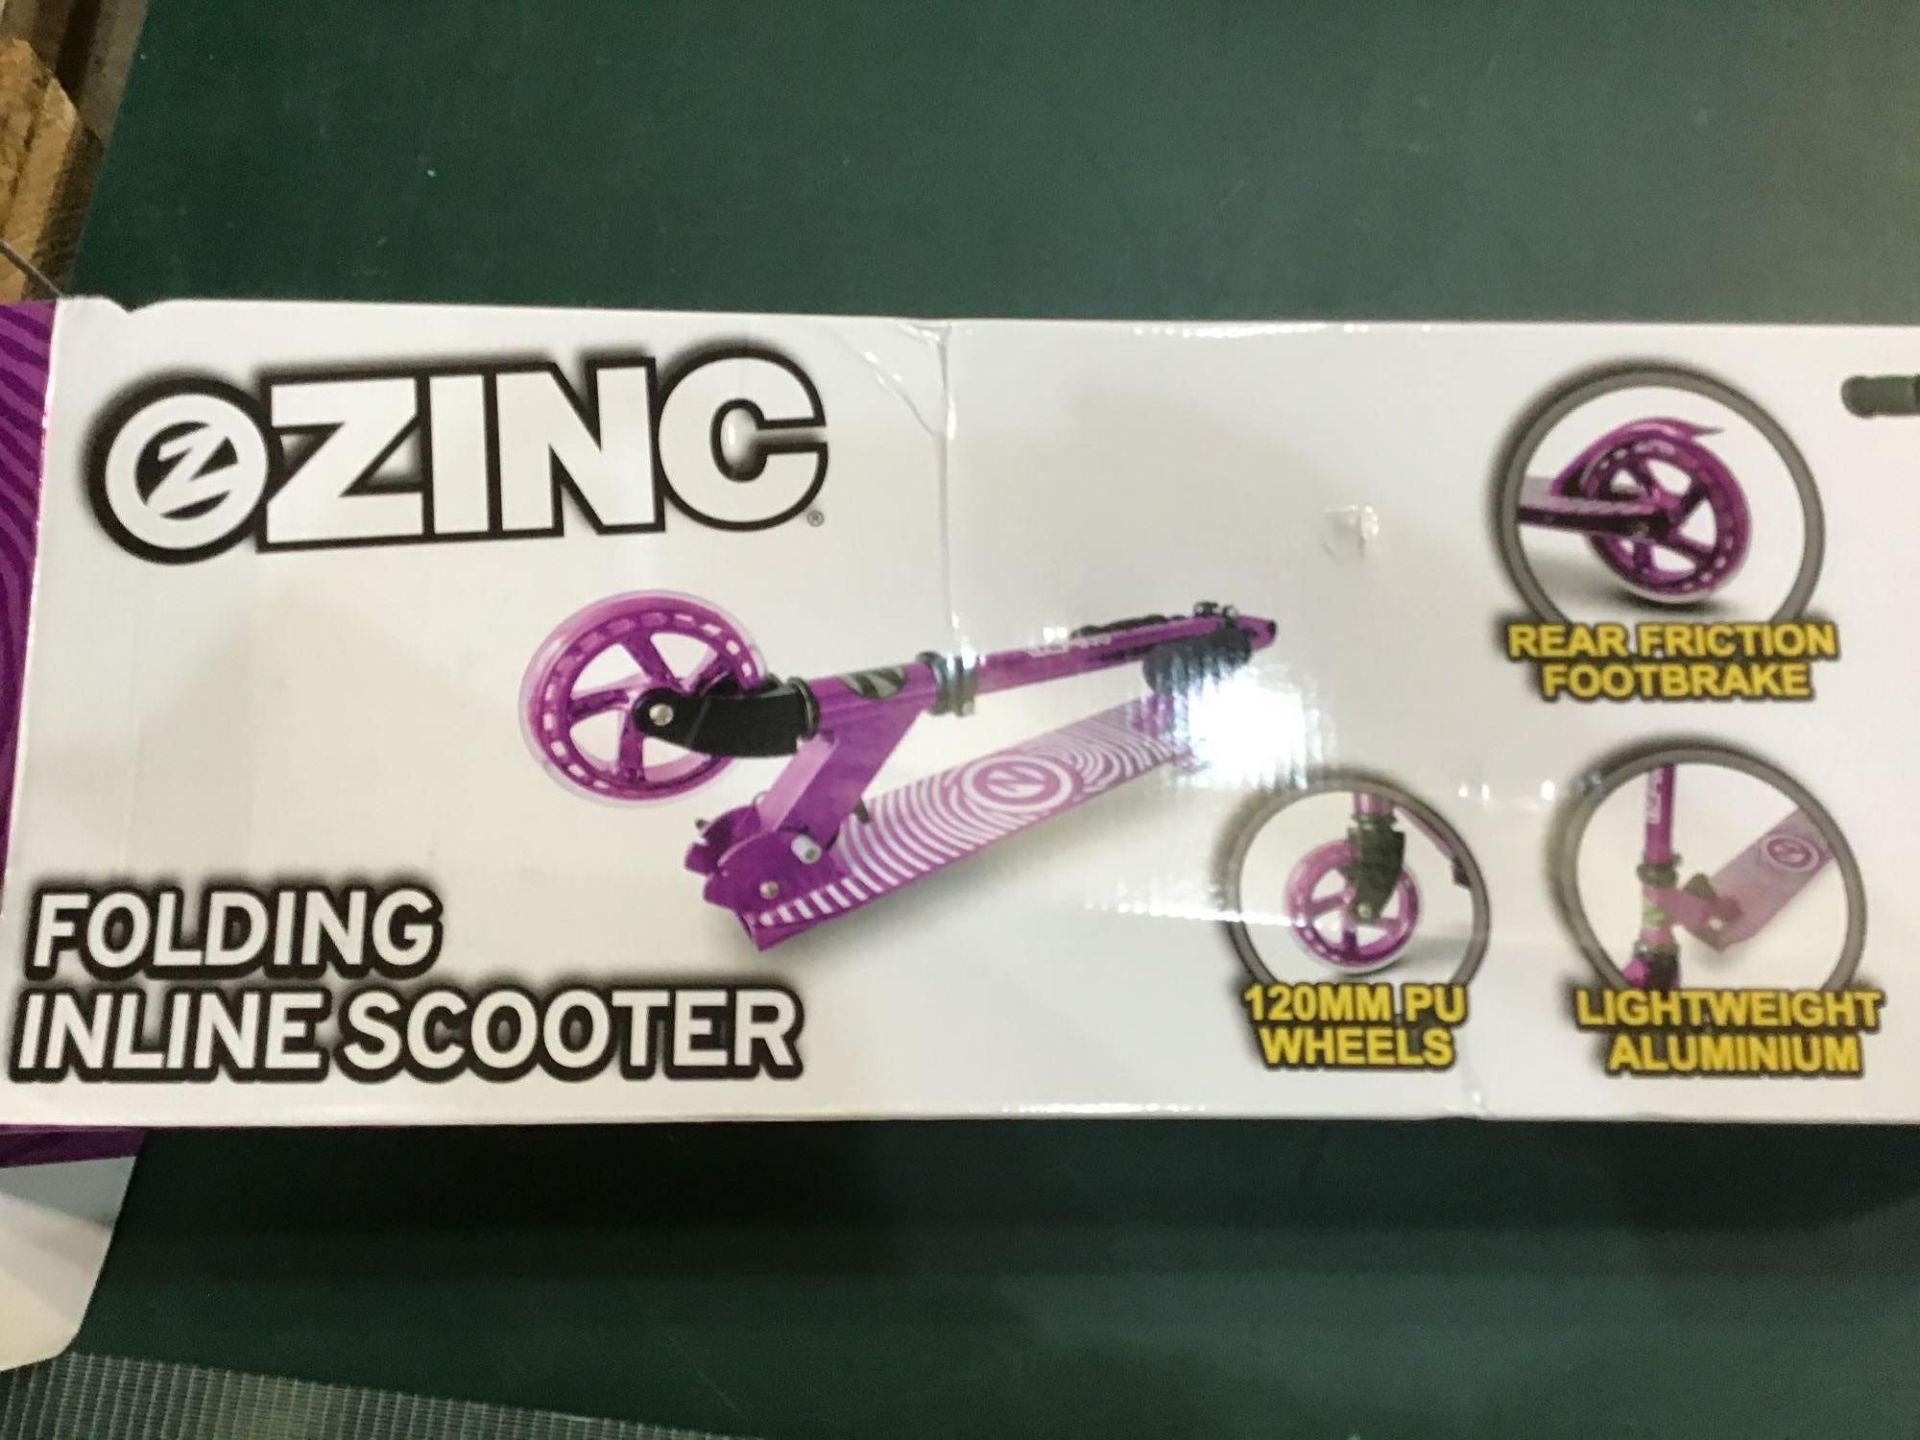 Zinc Aluminium Identity Folding Scooter - Purple - £29.99 RRP - Image 2 of 4